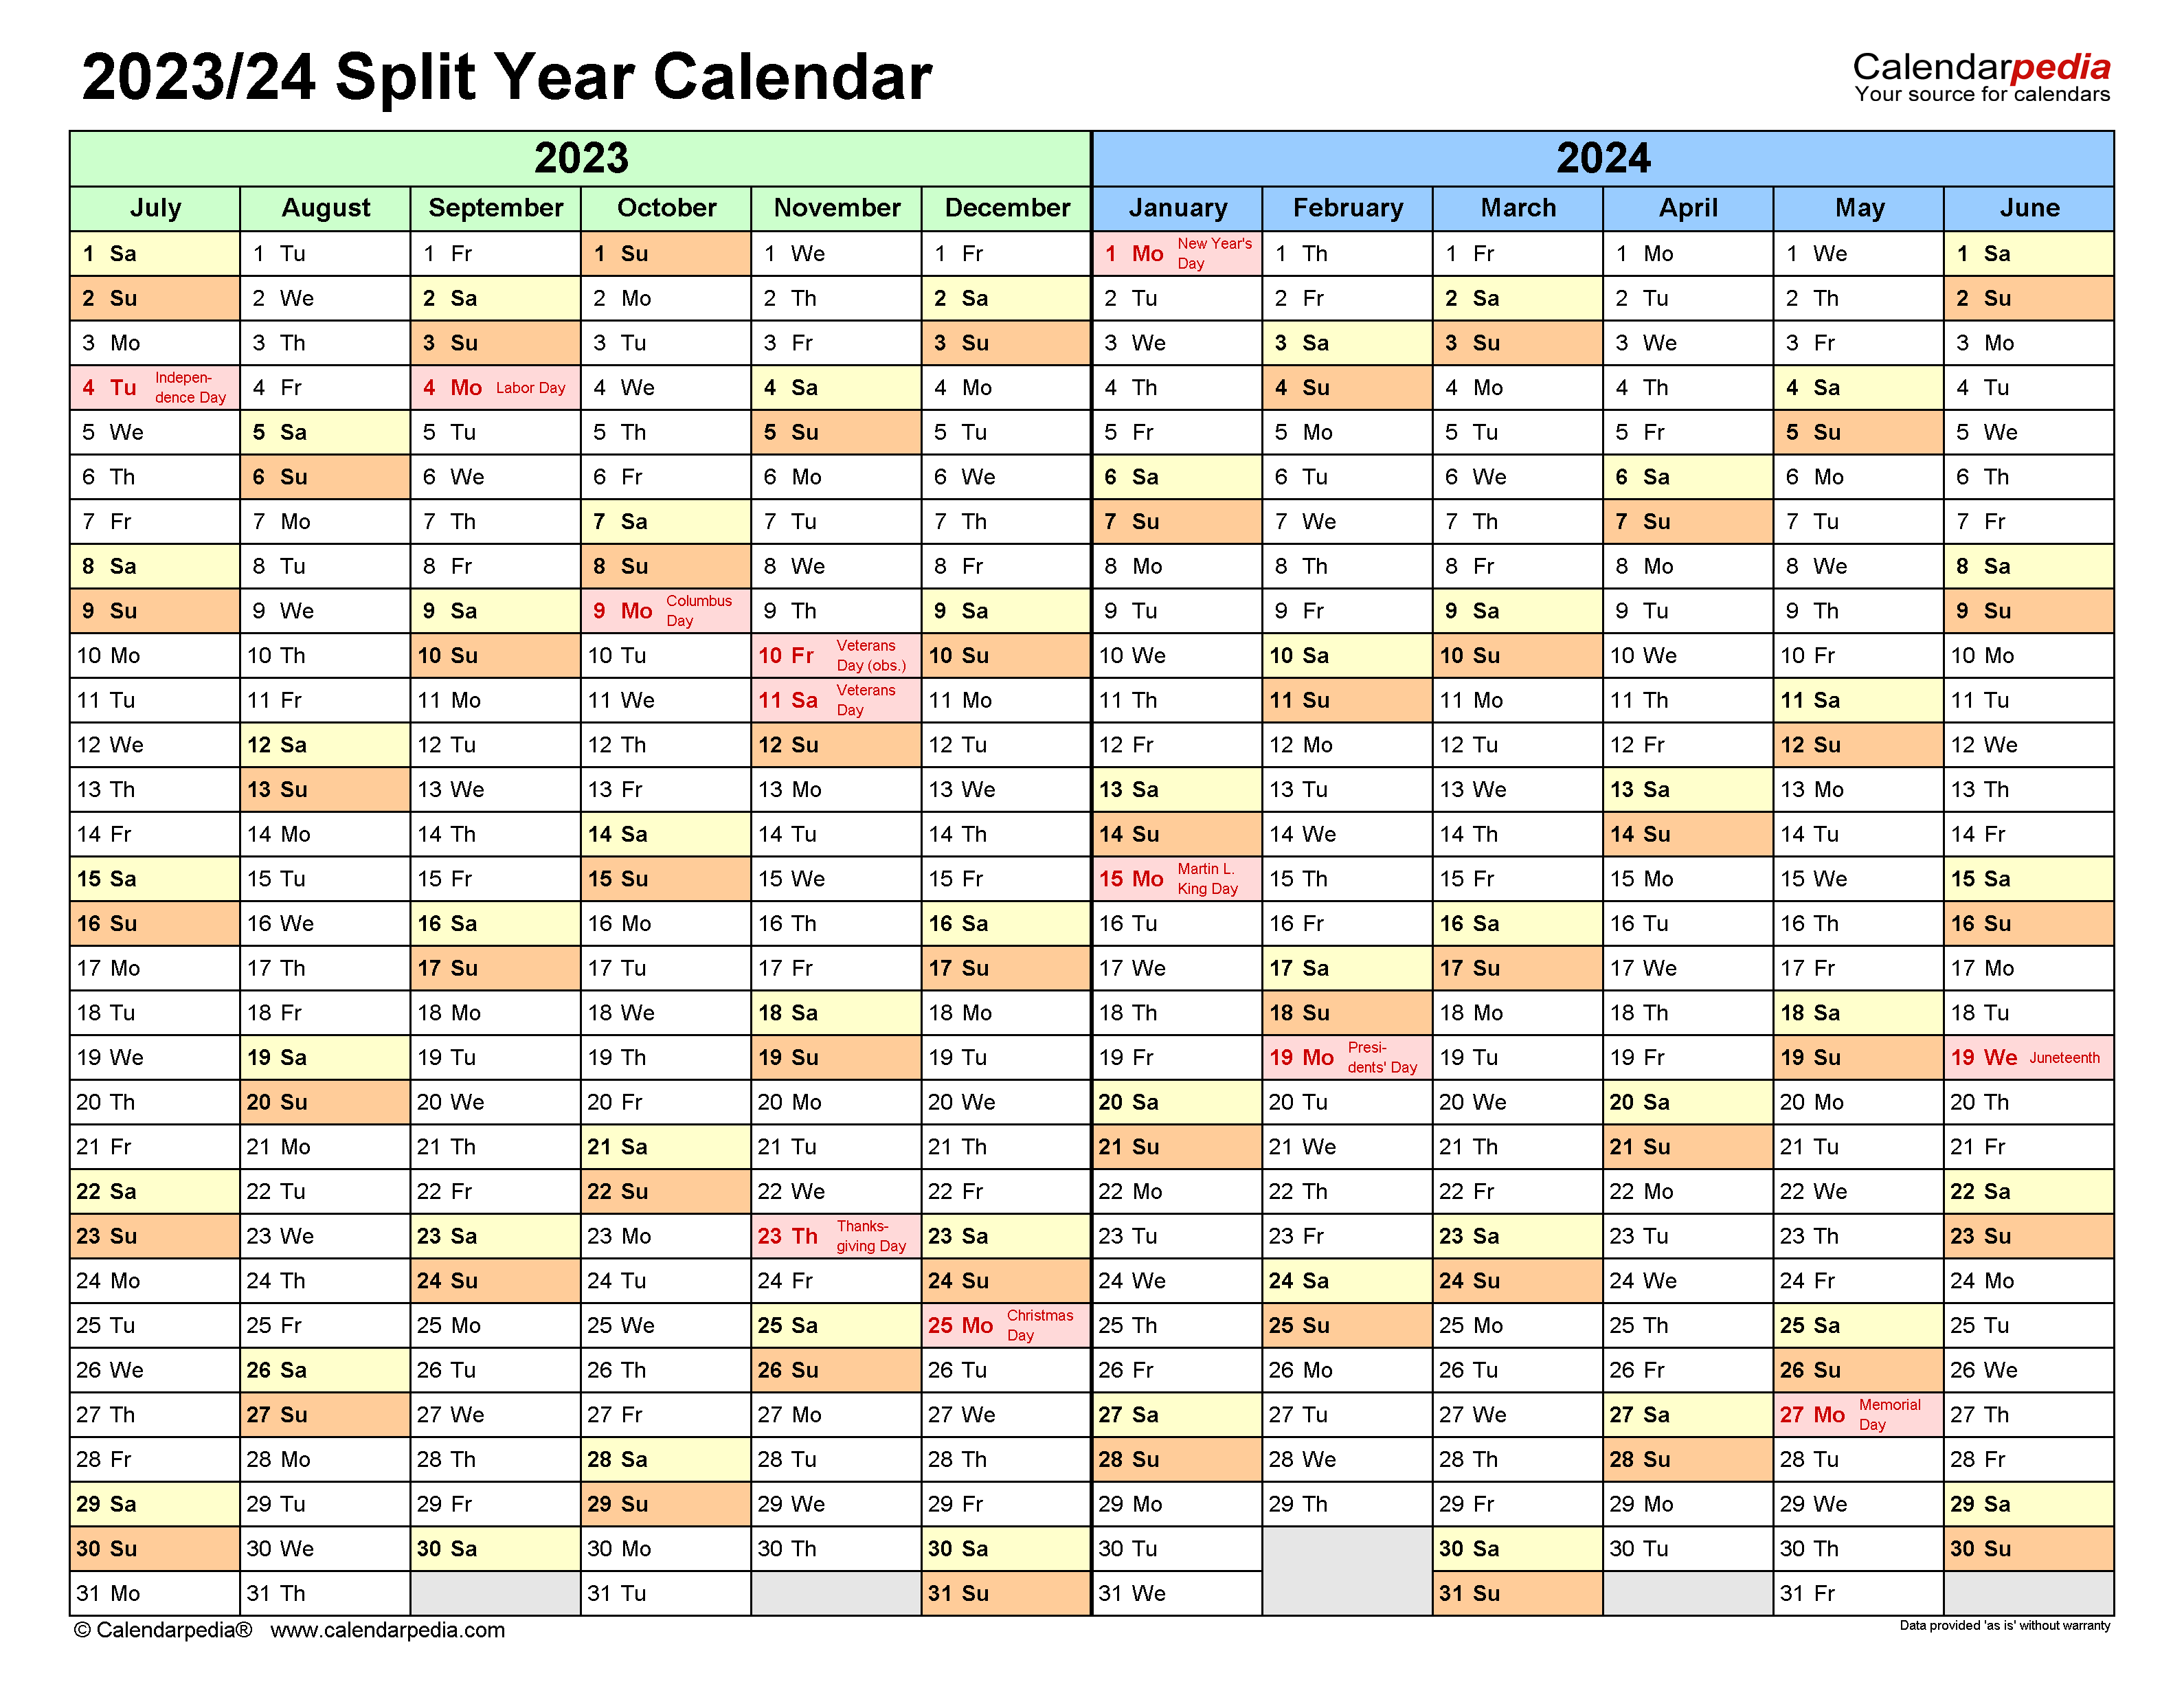 Split Year Calendars 2023/2024 (July To June) - Excel Templates intended for Year Calendar July 2023 To June 2024